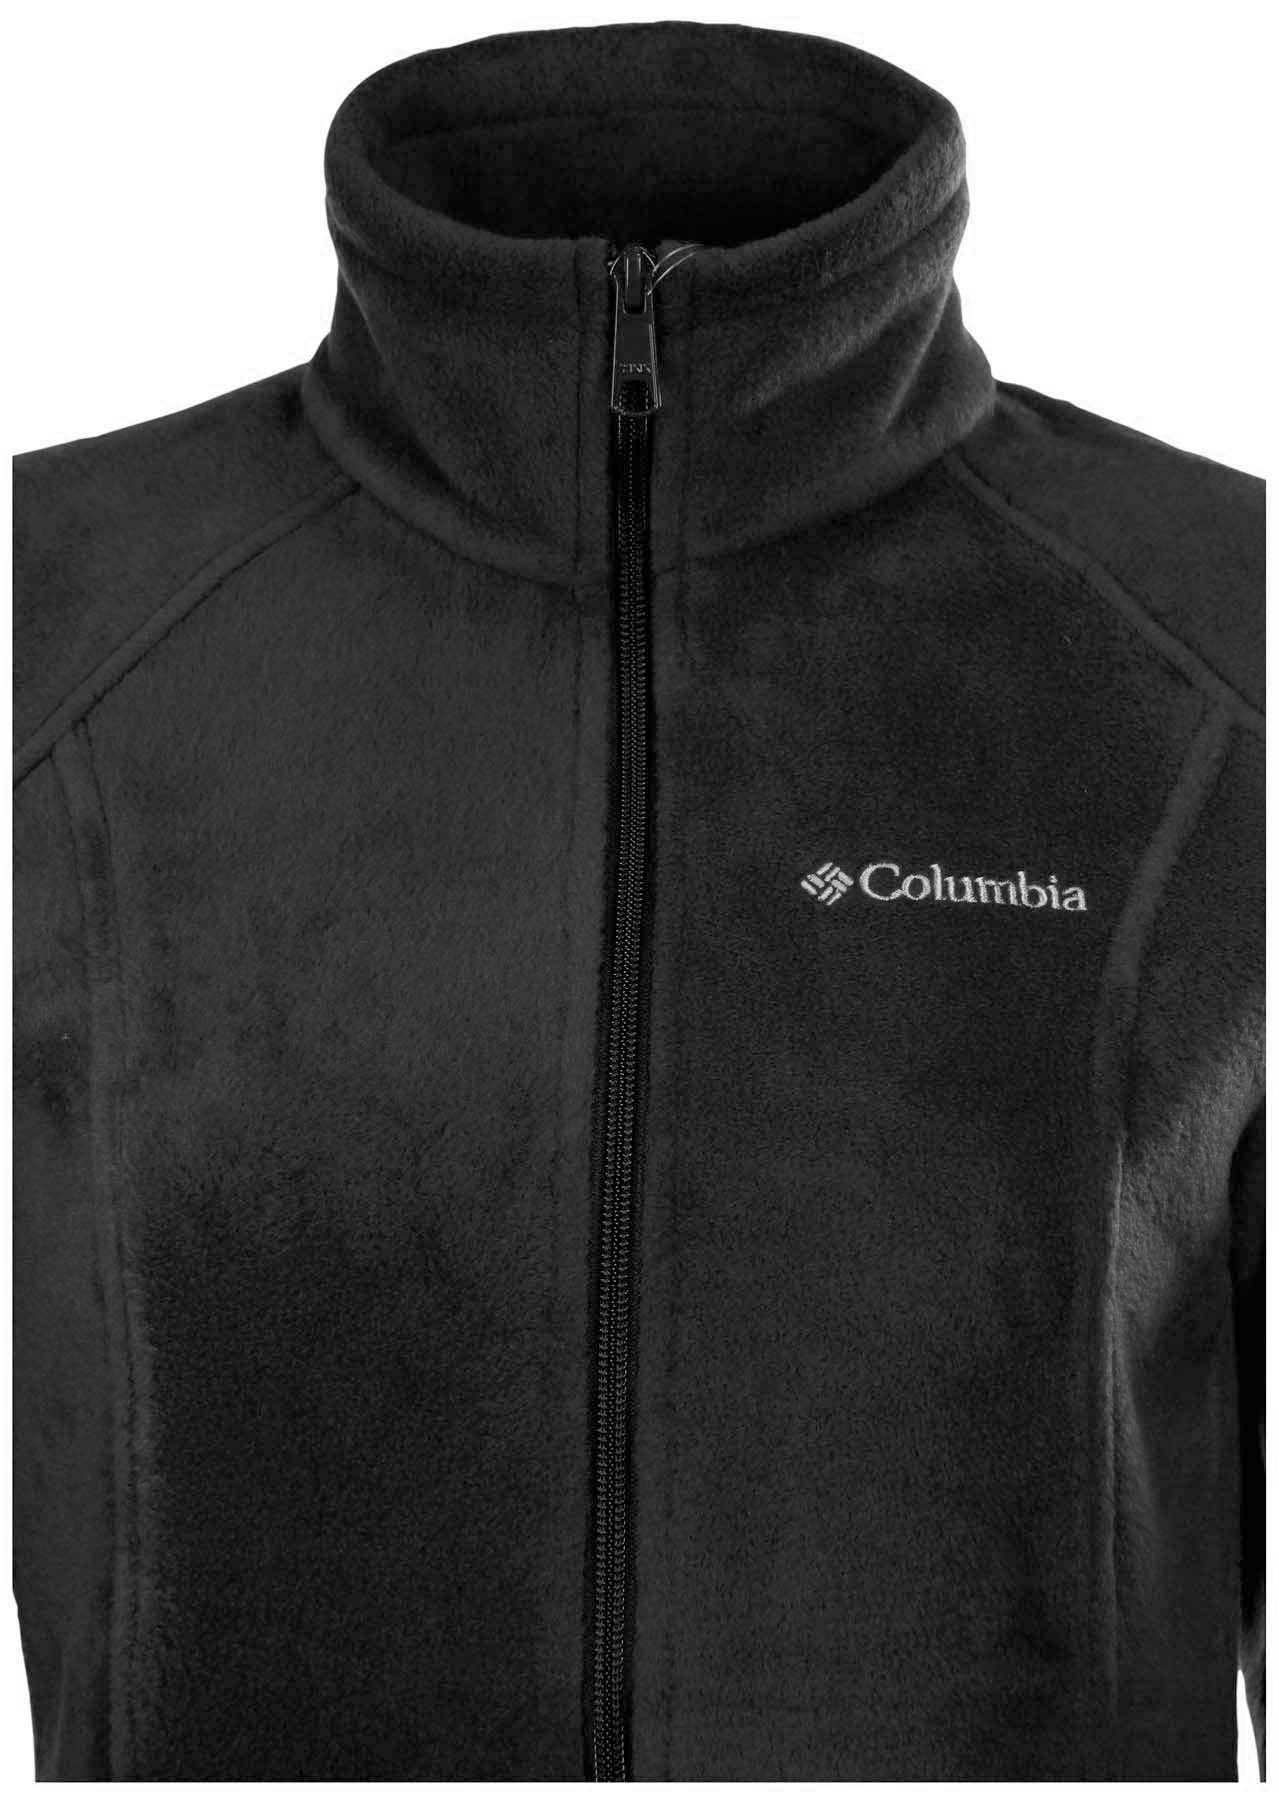 women's black columbia fleece jacket